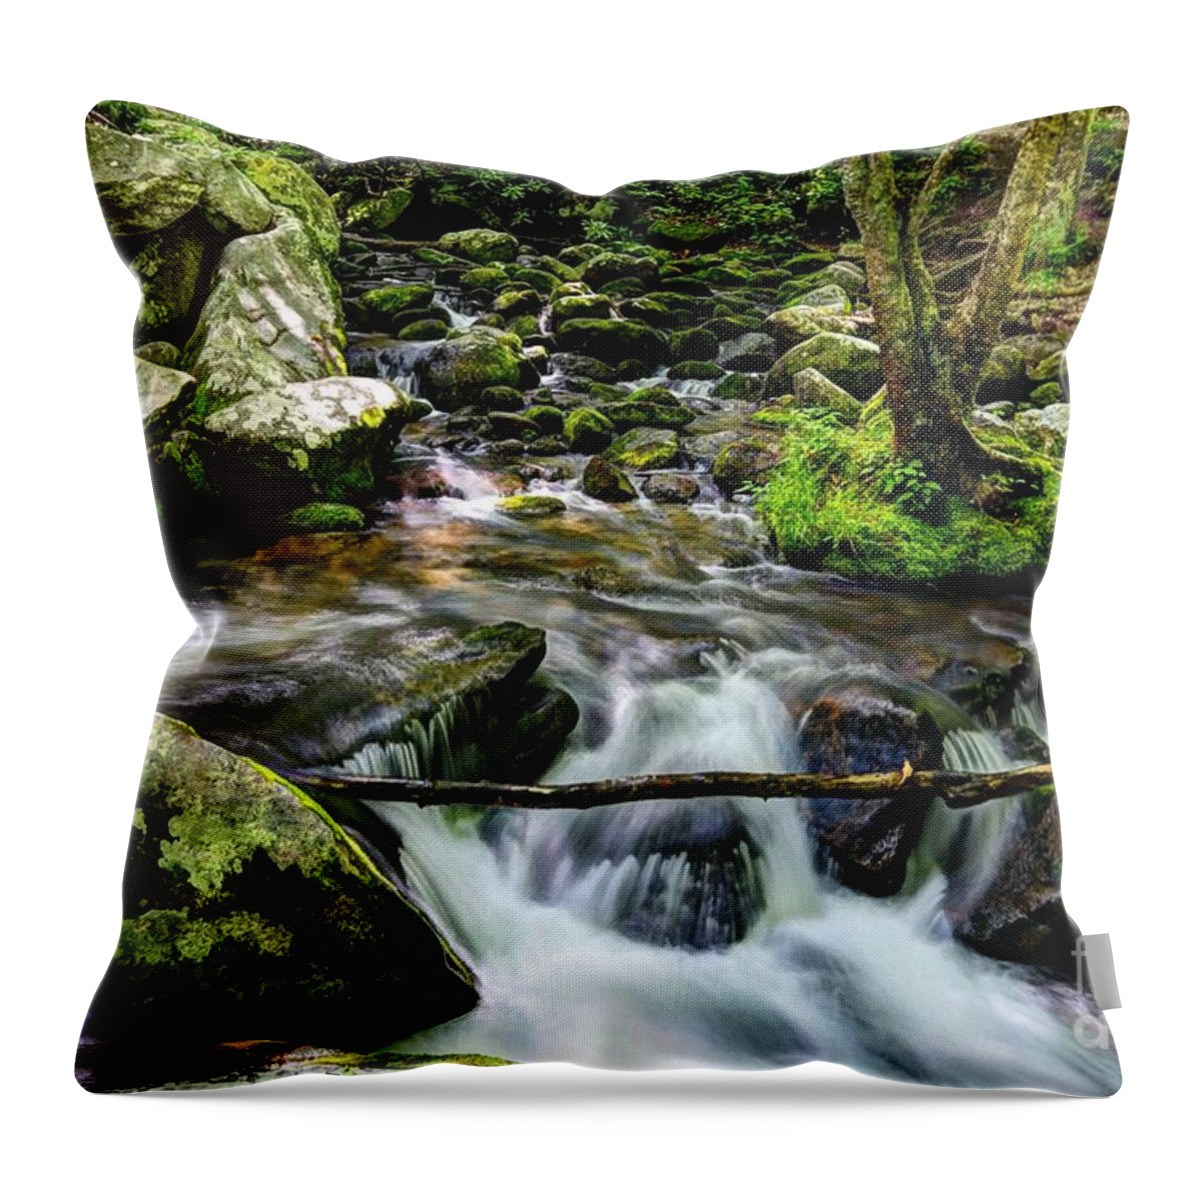 Smoky Mountains Throw Pillow featuring the photograph Smoky Mountain Stream 4 by Mel Steinhauer